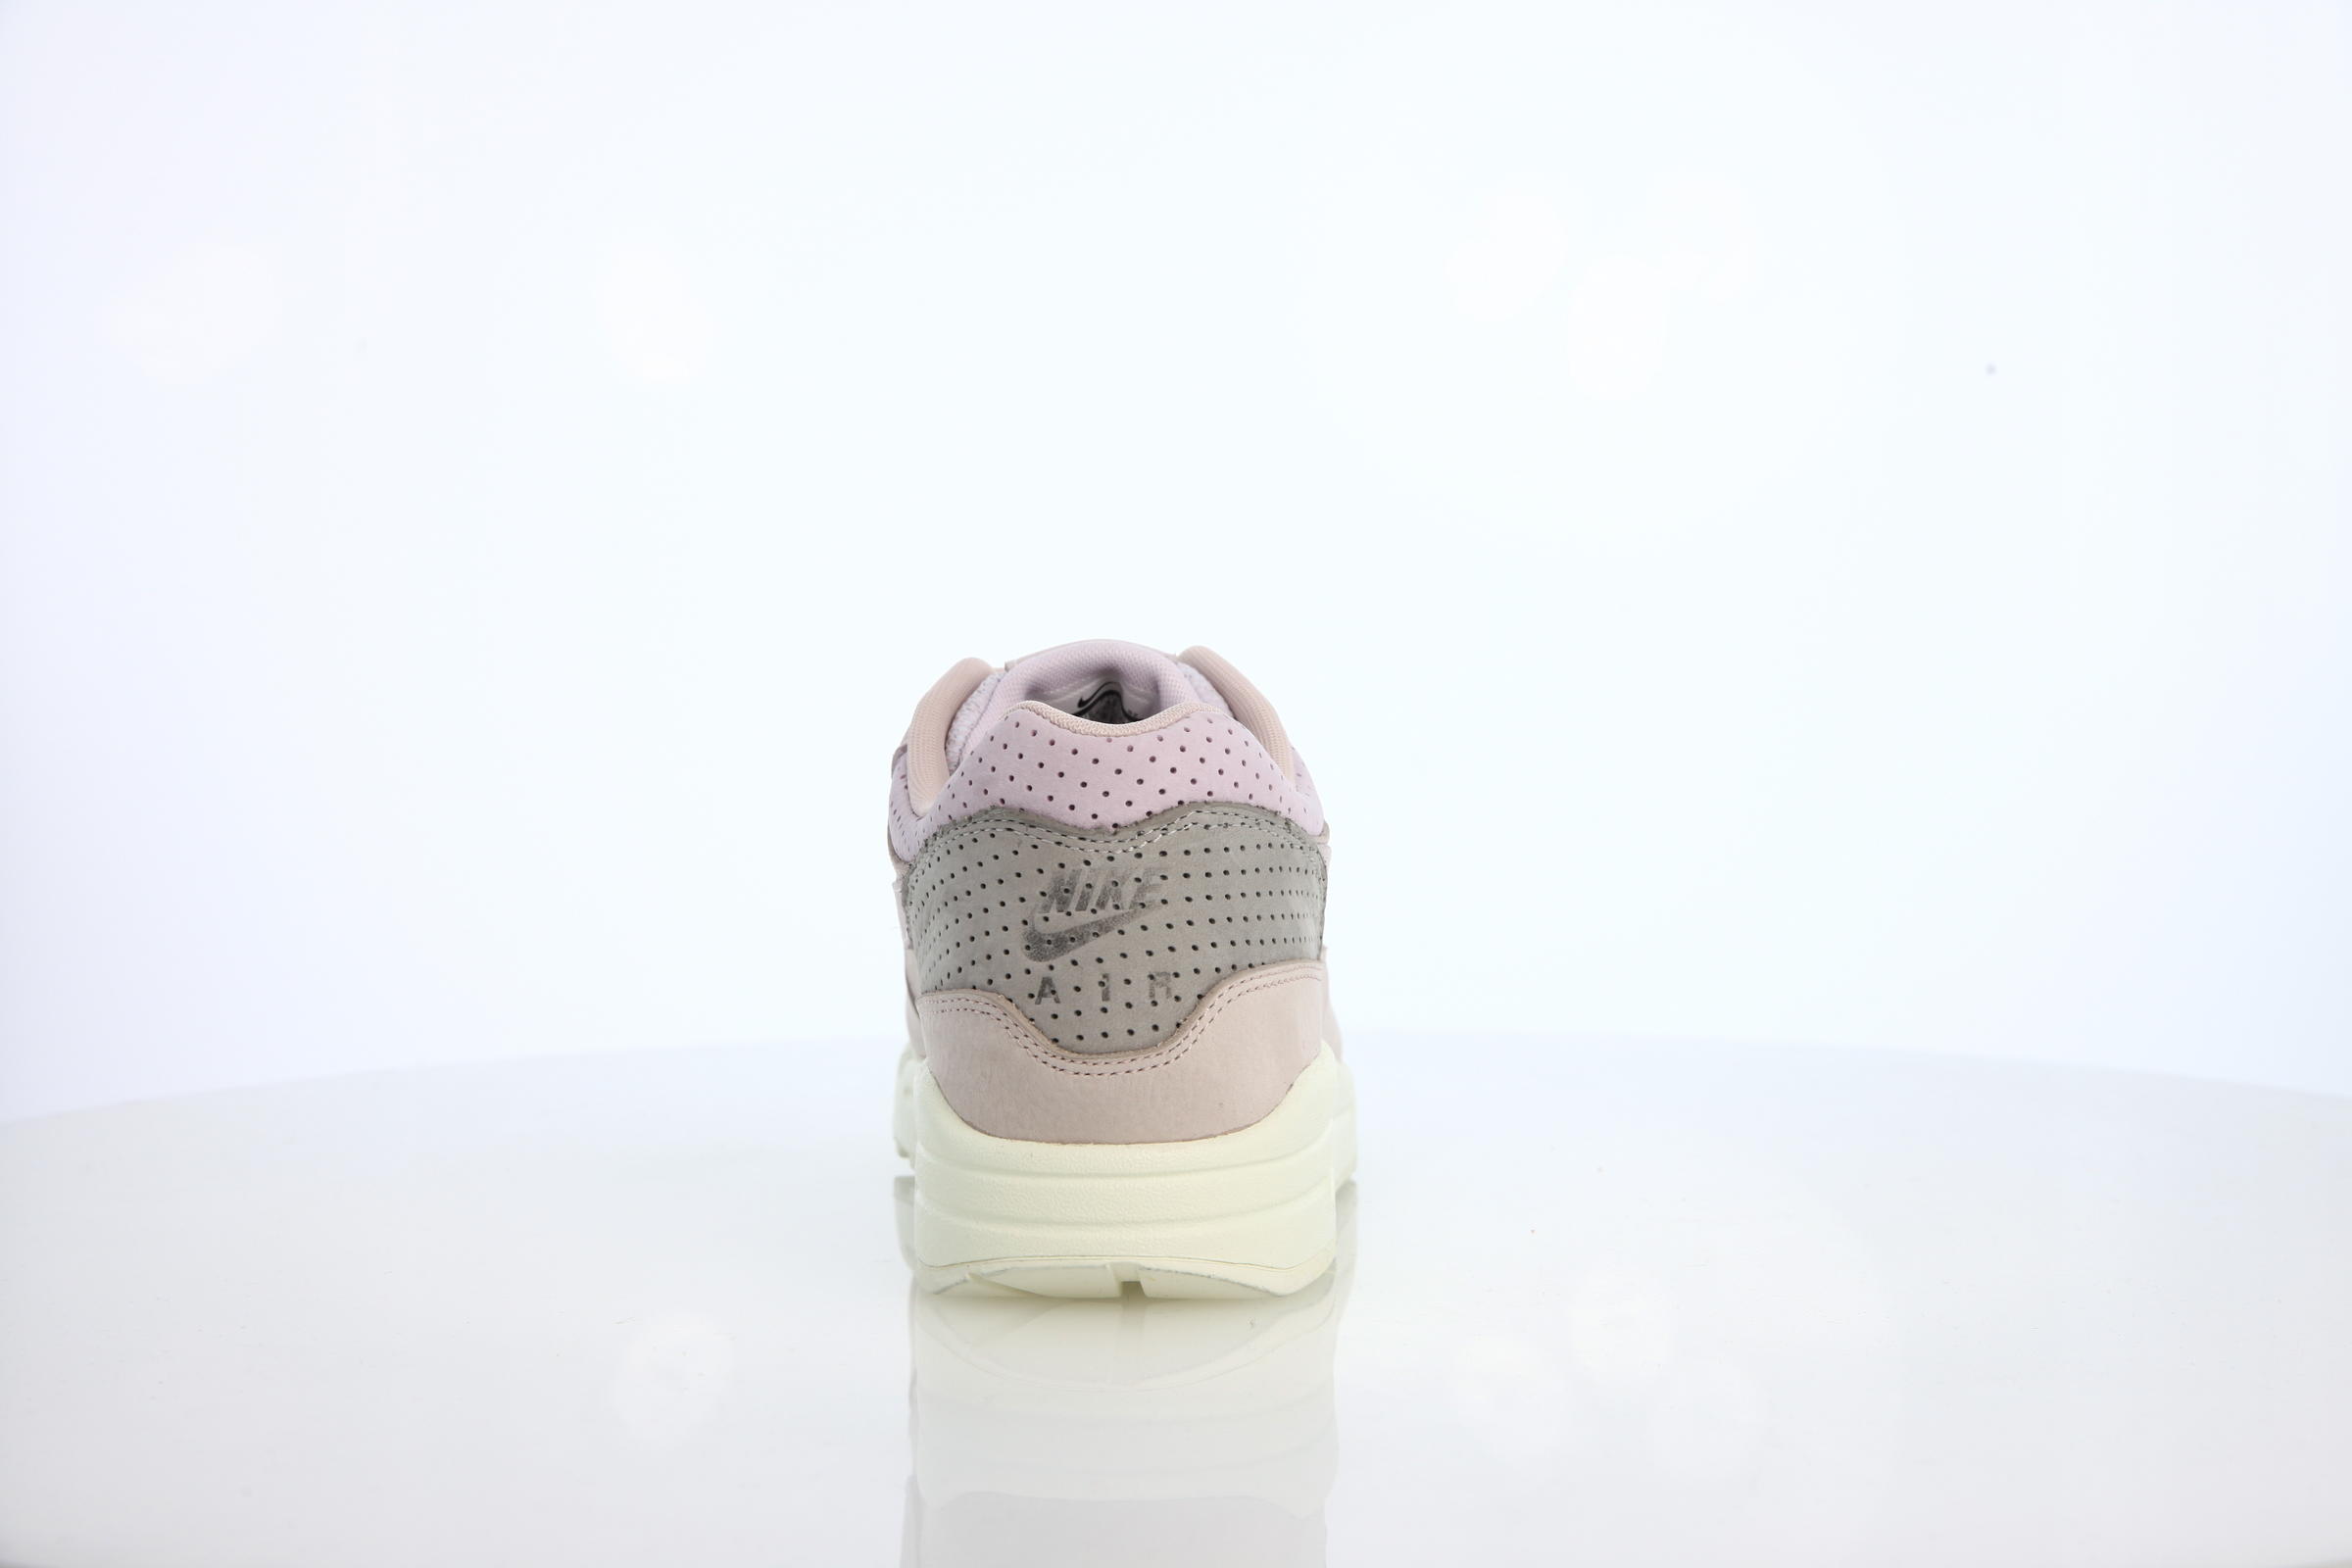 Nike Air Max 1 Pinnacle "Pearl Pink"